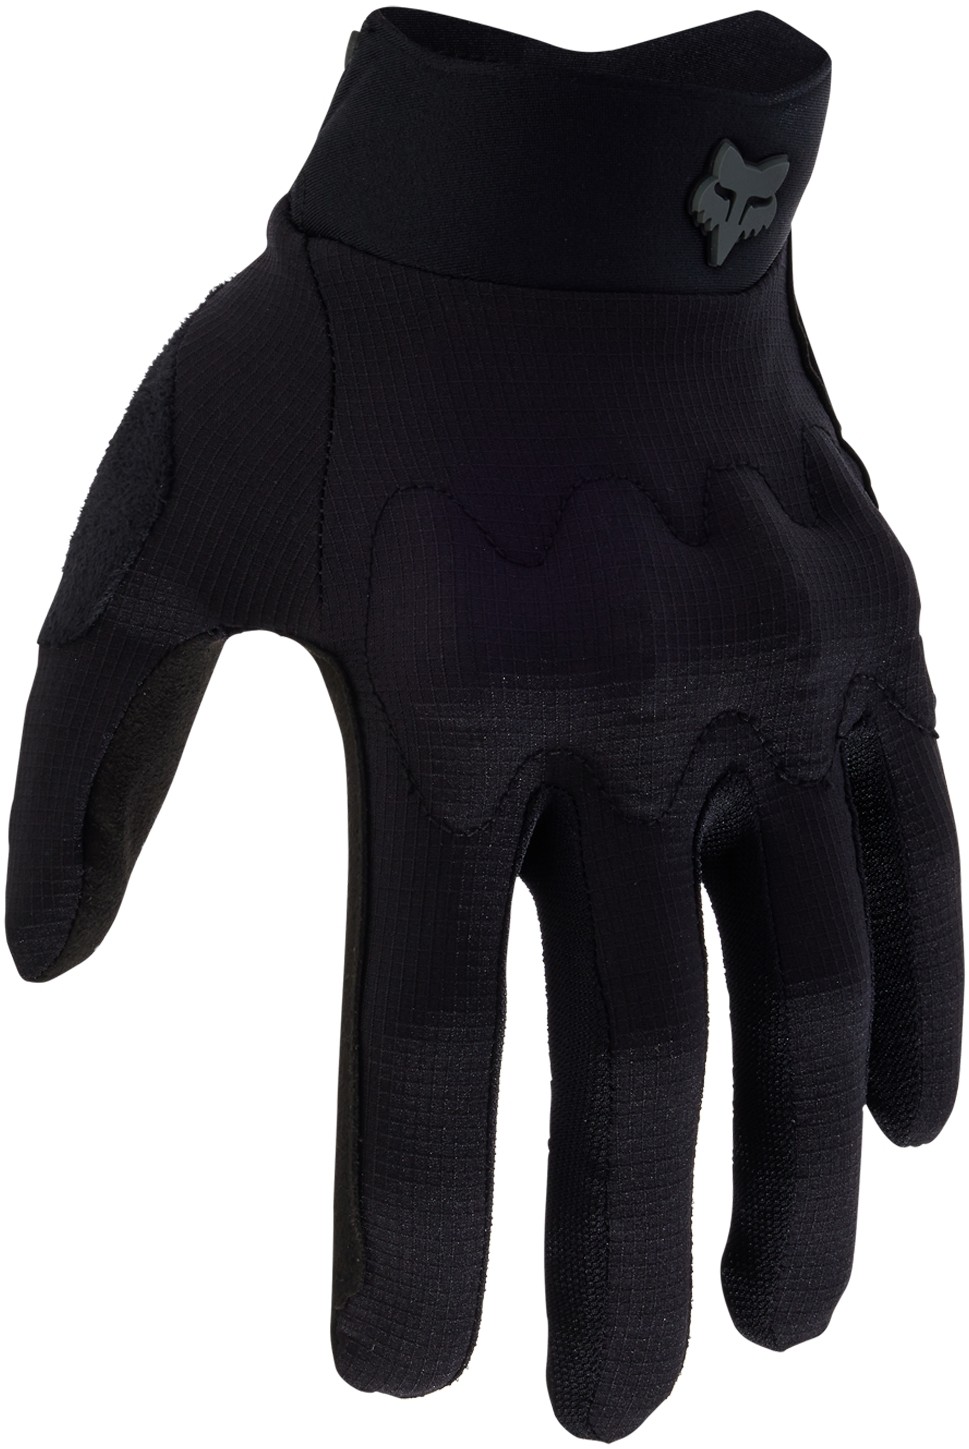 Defend D3O Long Finger MTB Cycling Gloves image 0